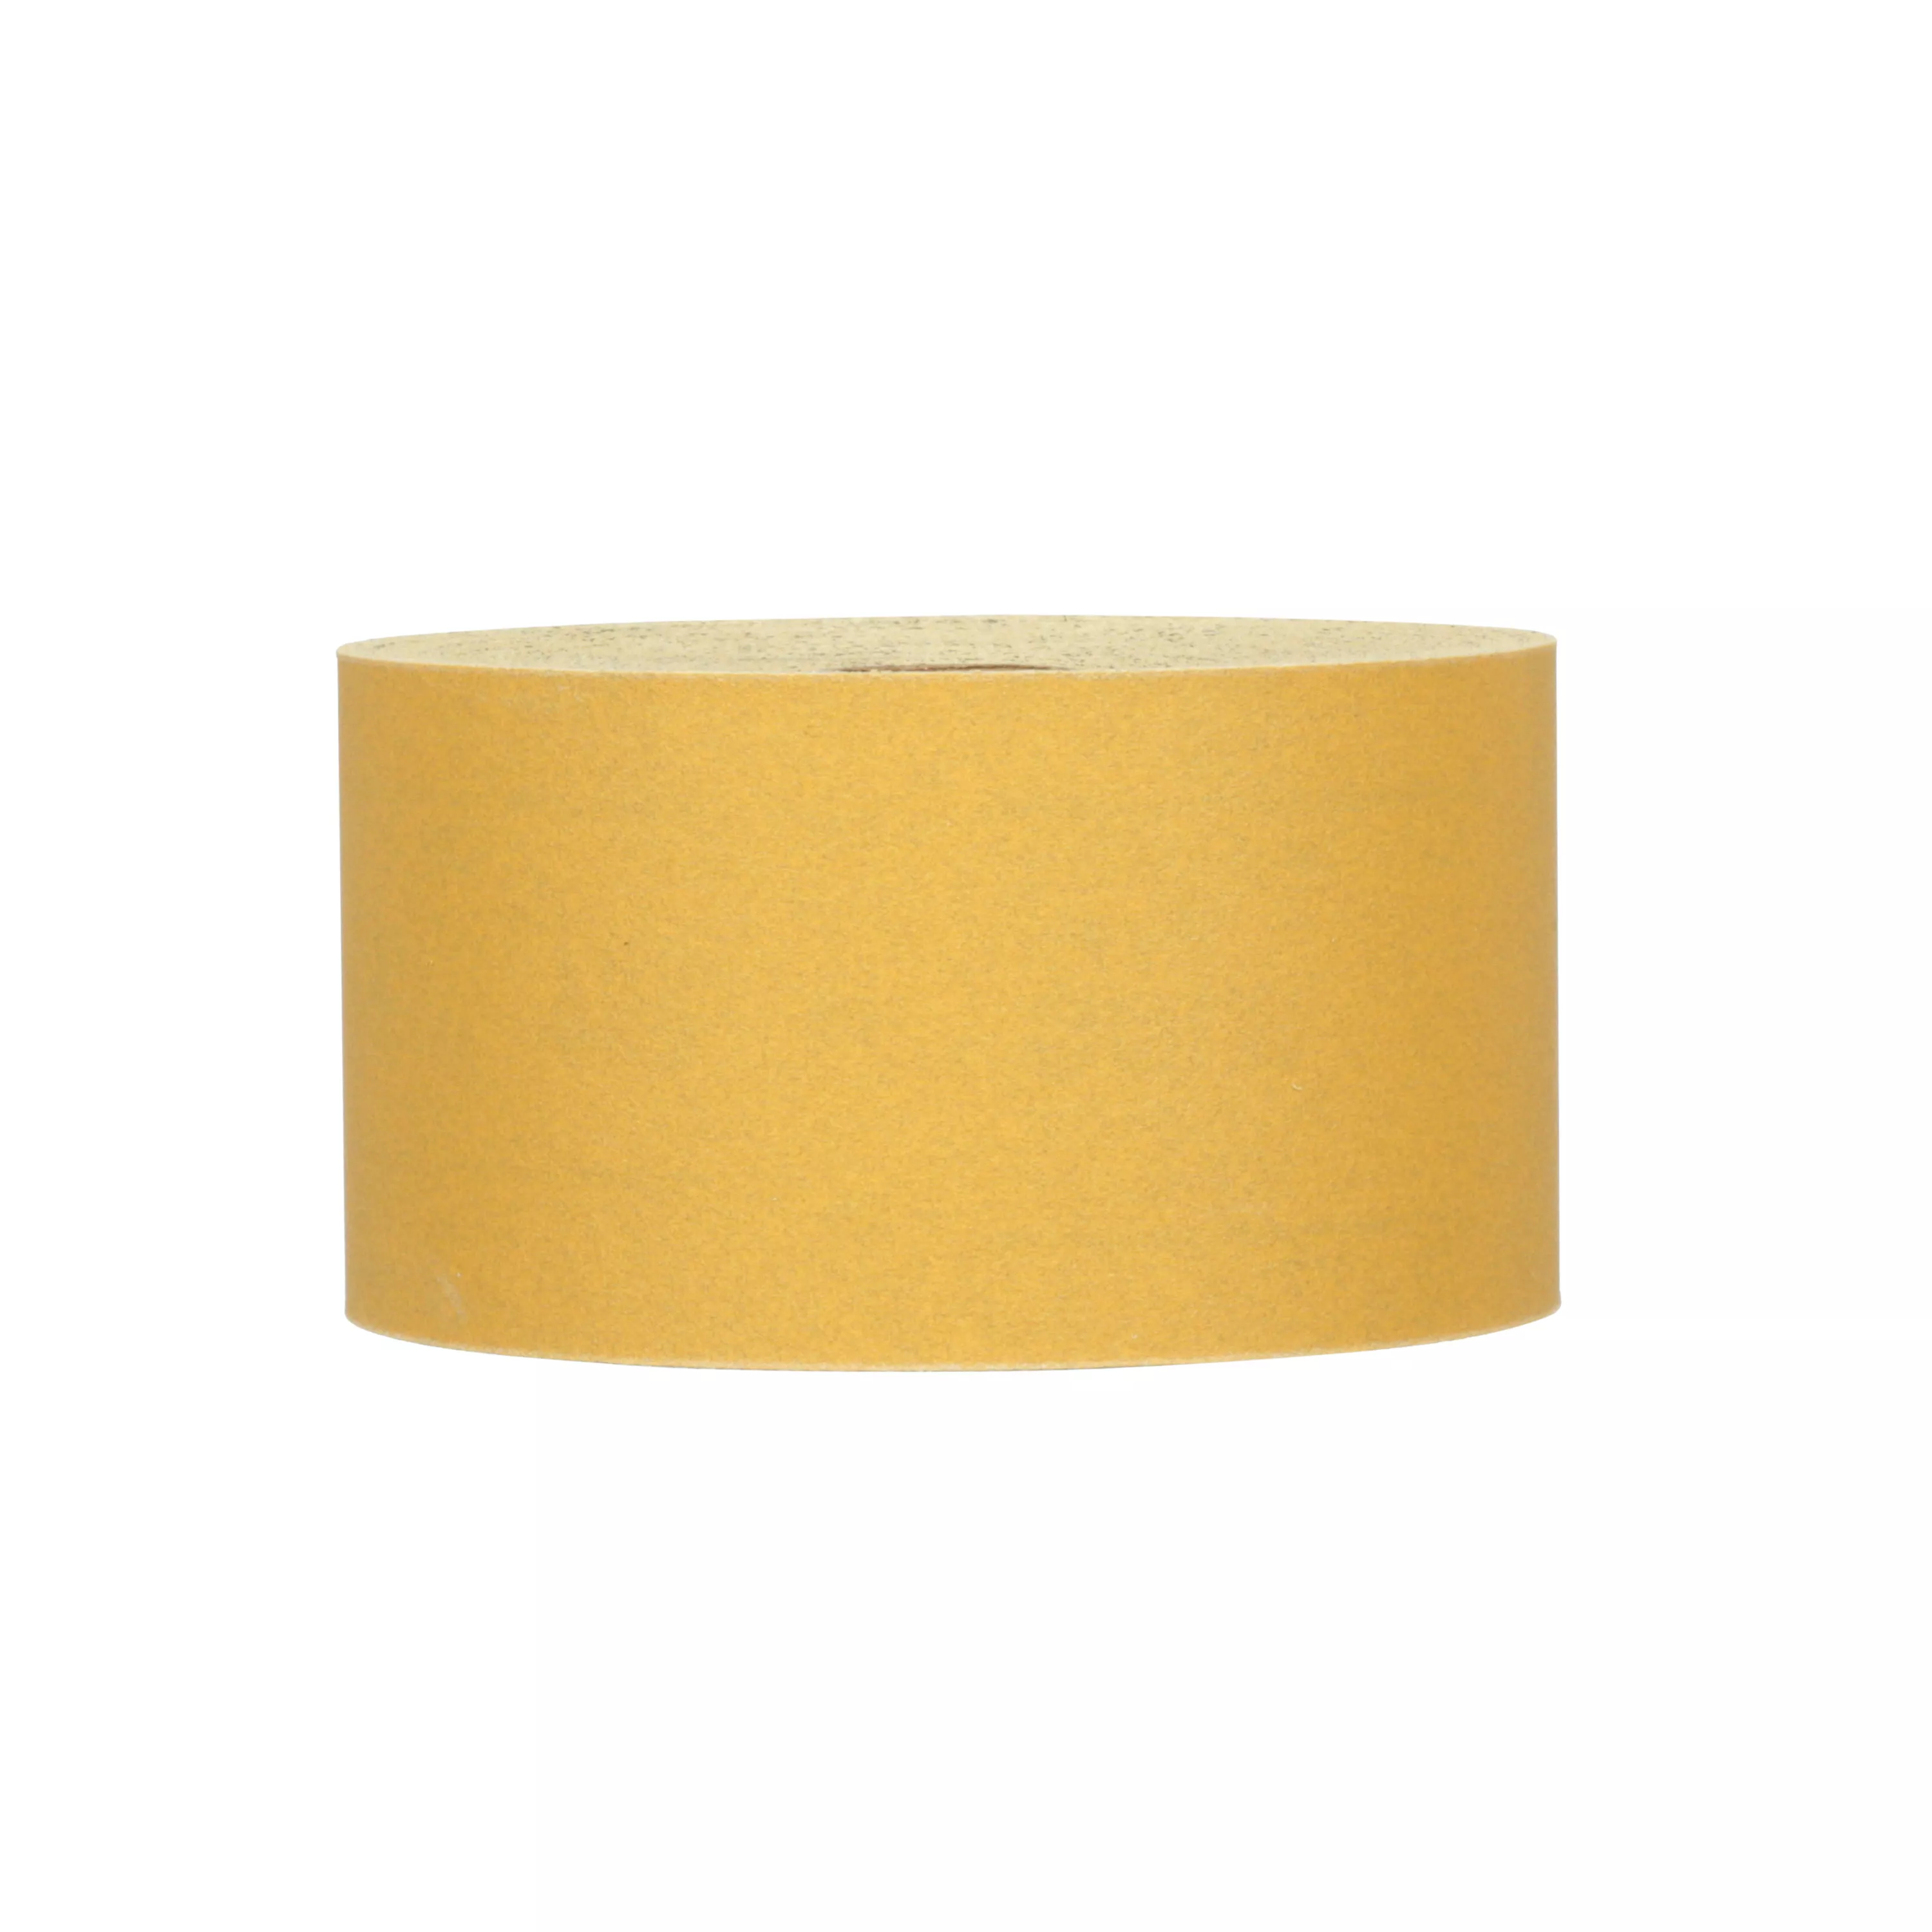 Product Number 236U | 3M™ Stikit™ Gold Sheet Roll